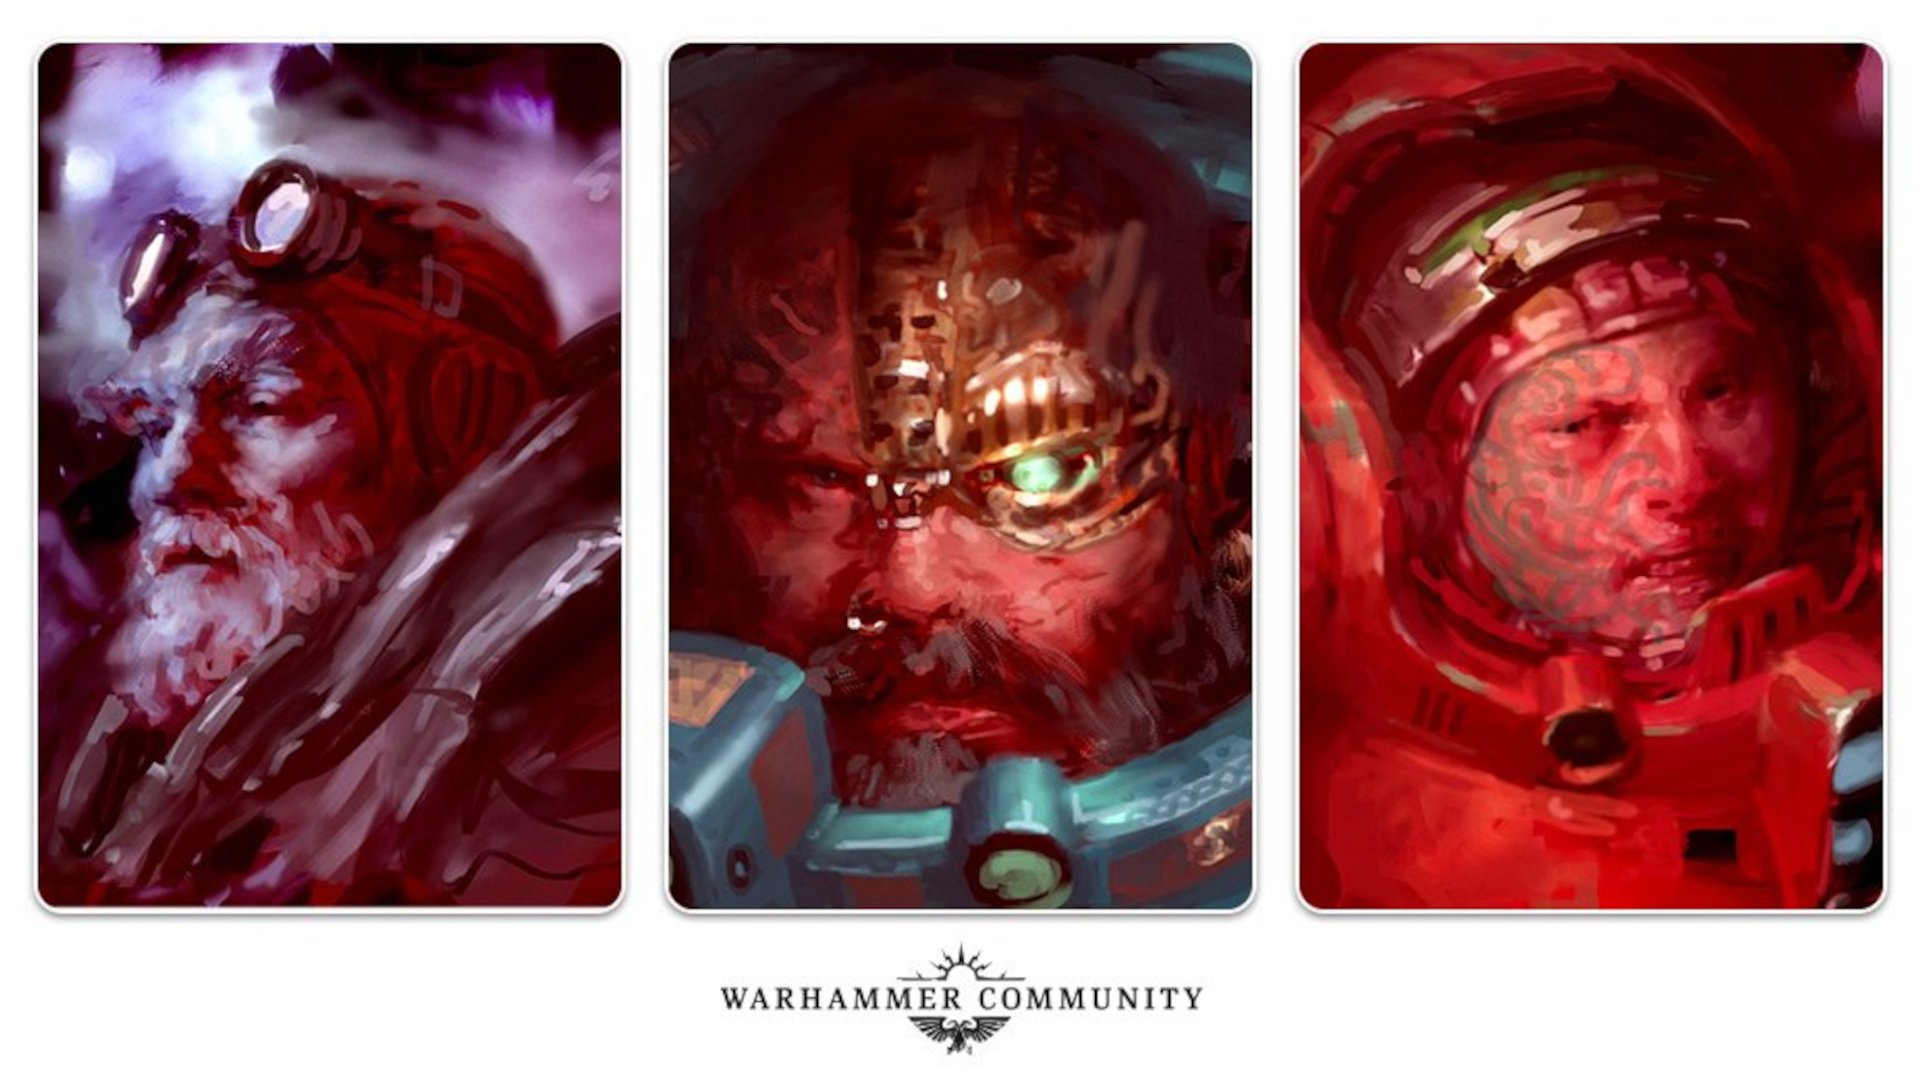 Warhammer 40k Leagues of Votann guide - Games Workshop artwork showing different Kin faces